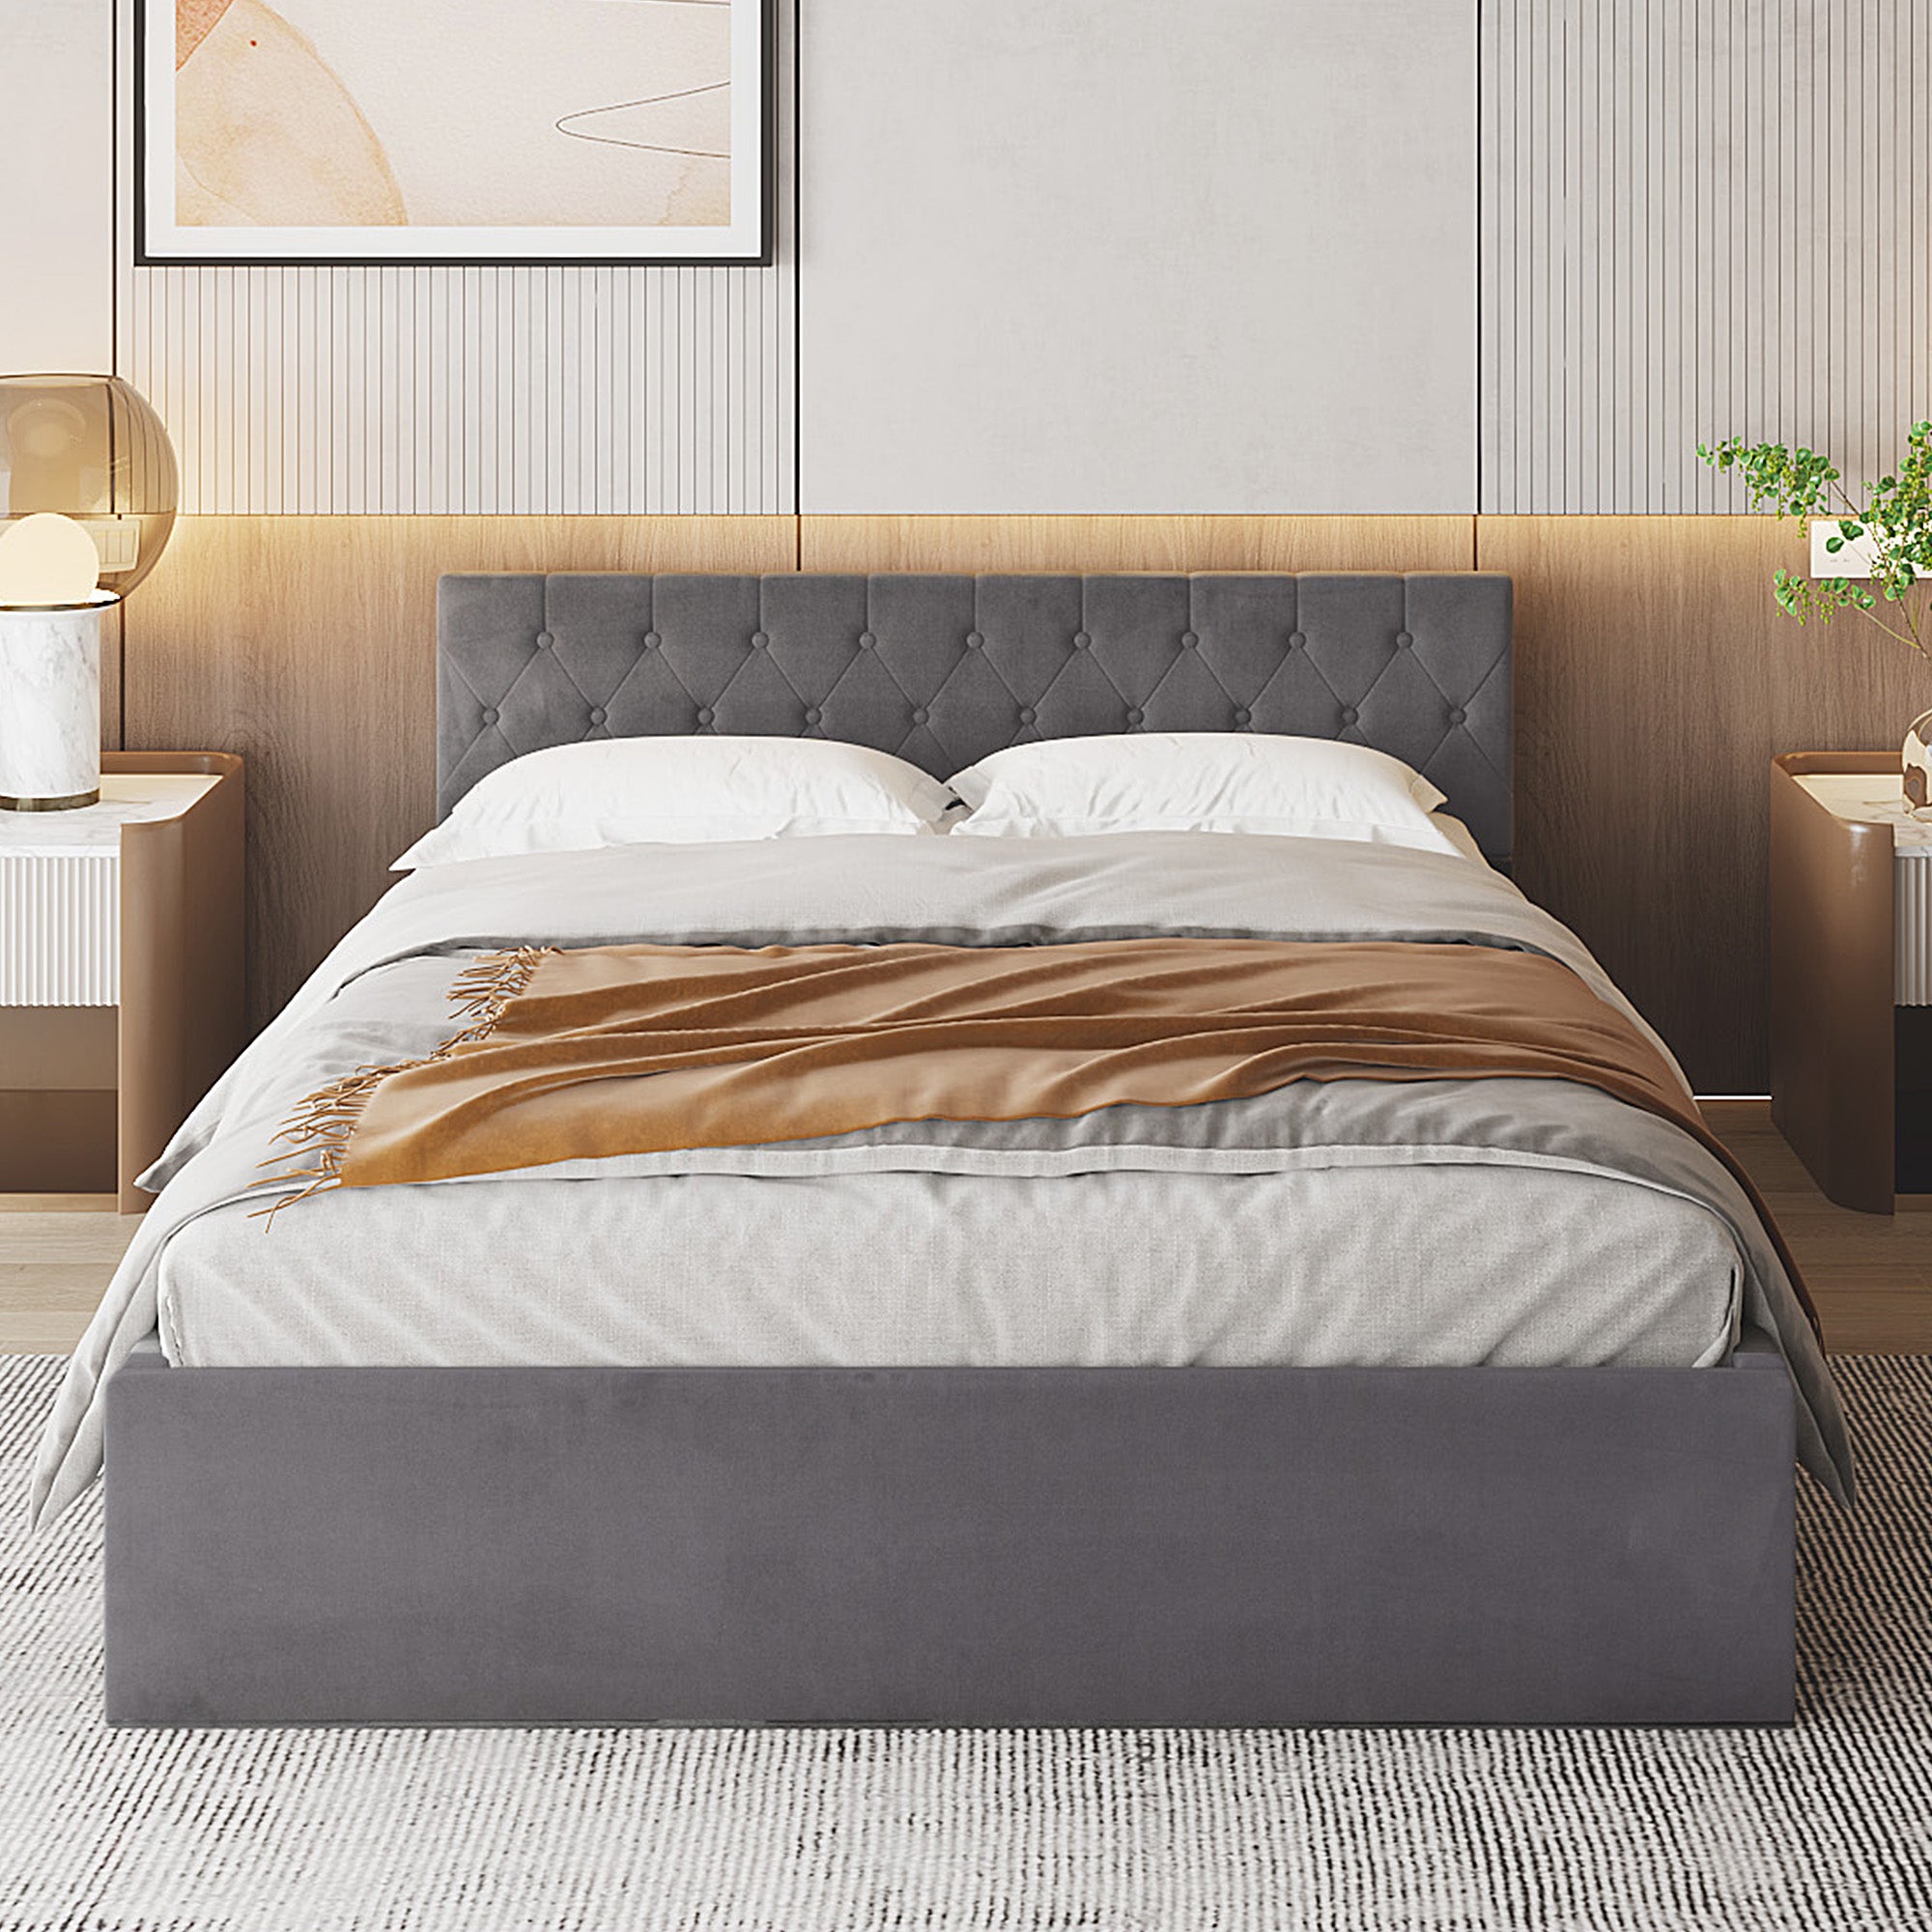 Bett mit Bettkasten Samt-Stoff Polsterbett Lattenrost Doppelbett Stauraum Holzfuß (Grau, 140 x 200 cm)